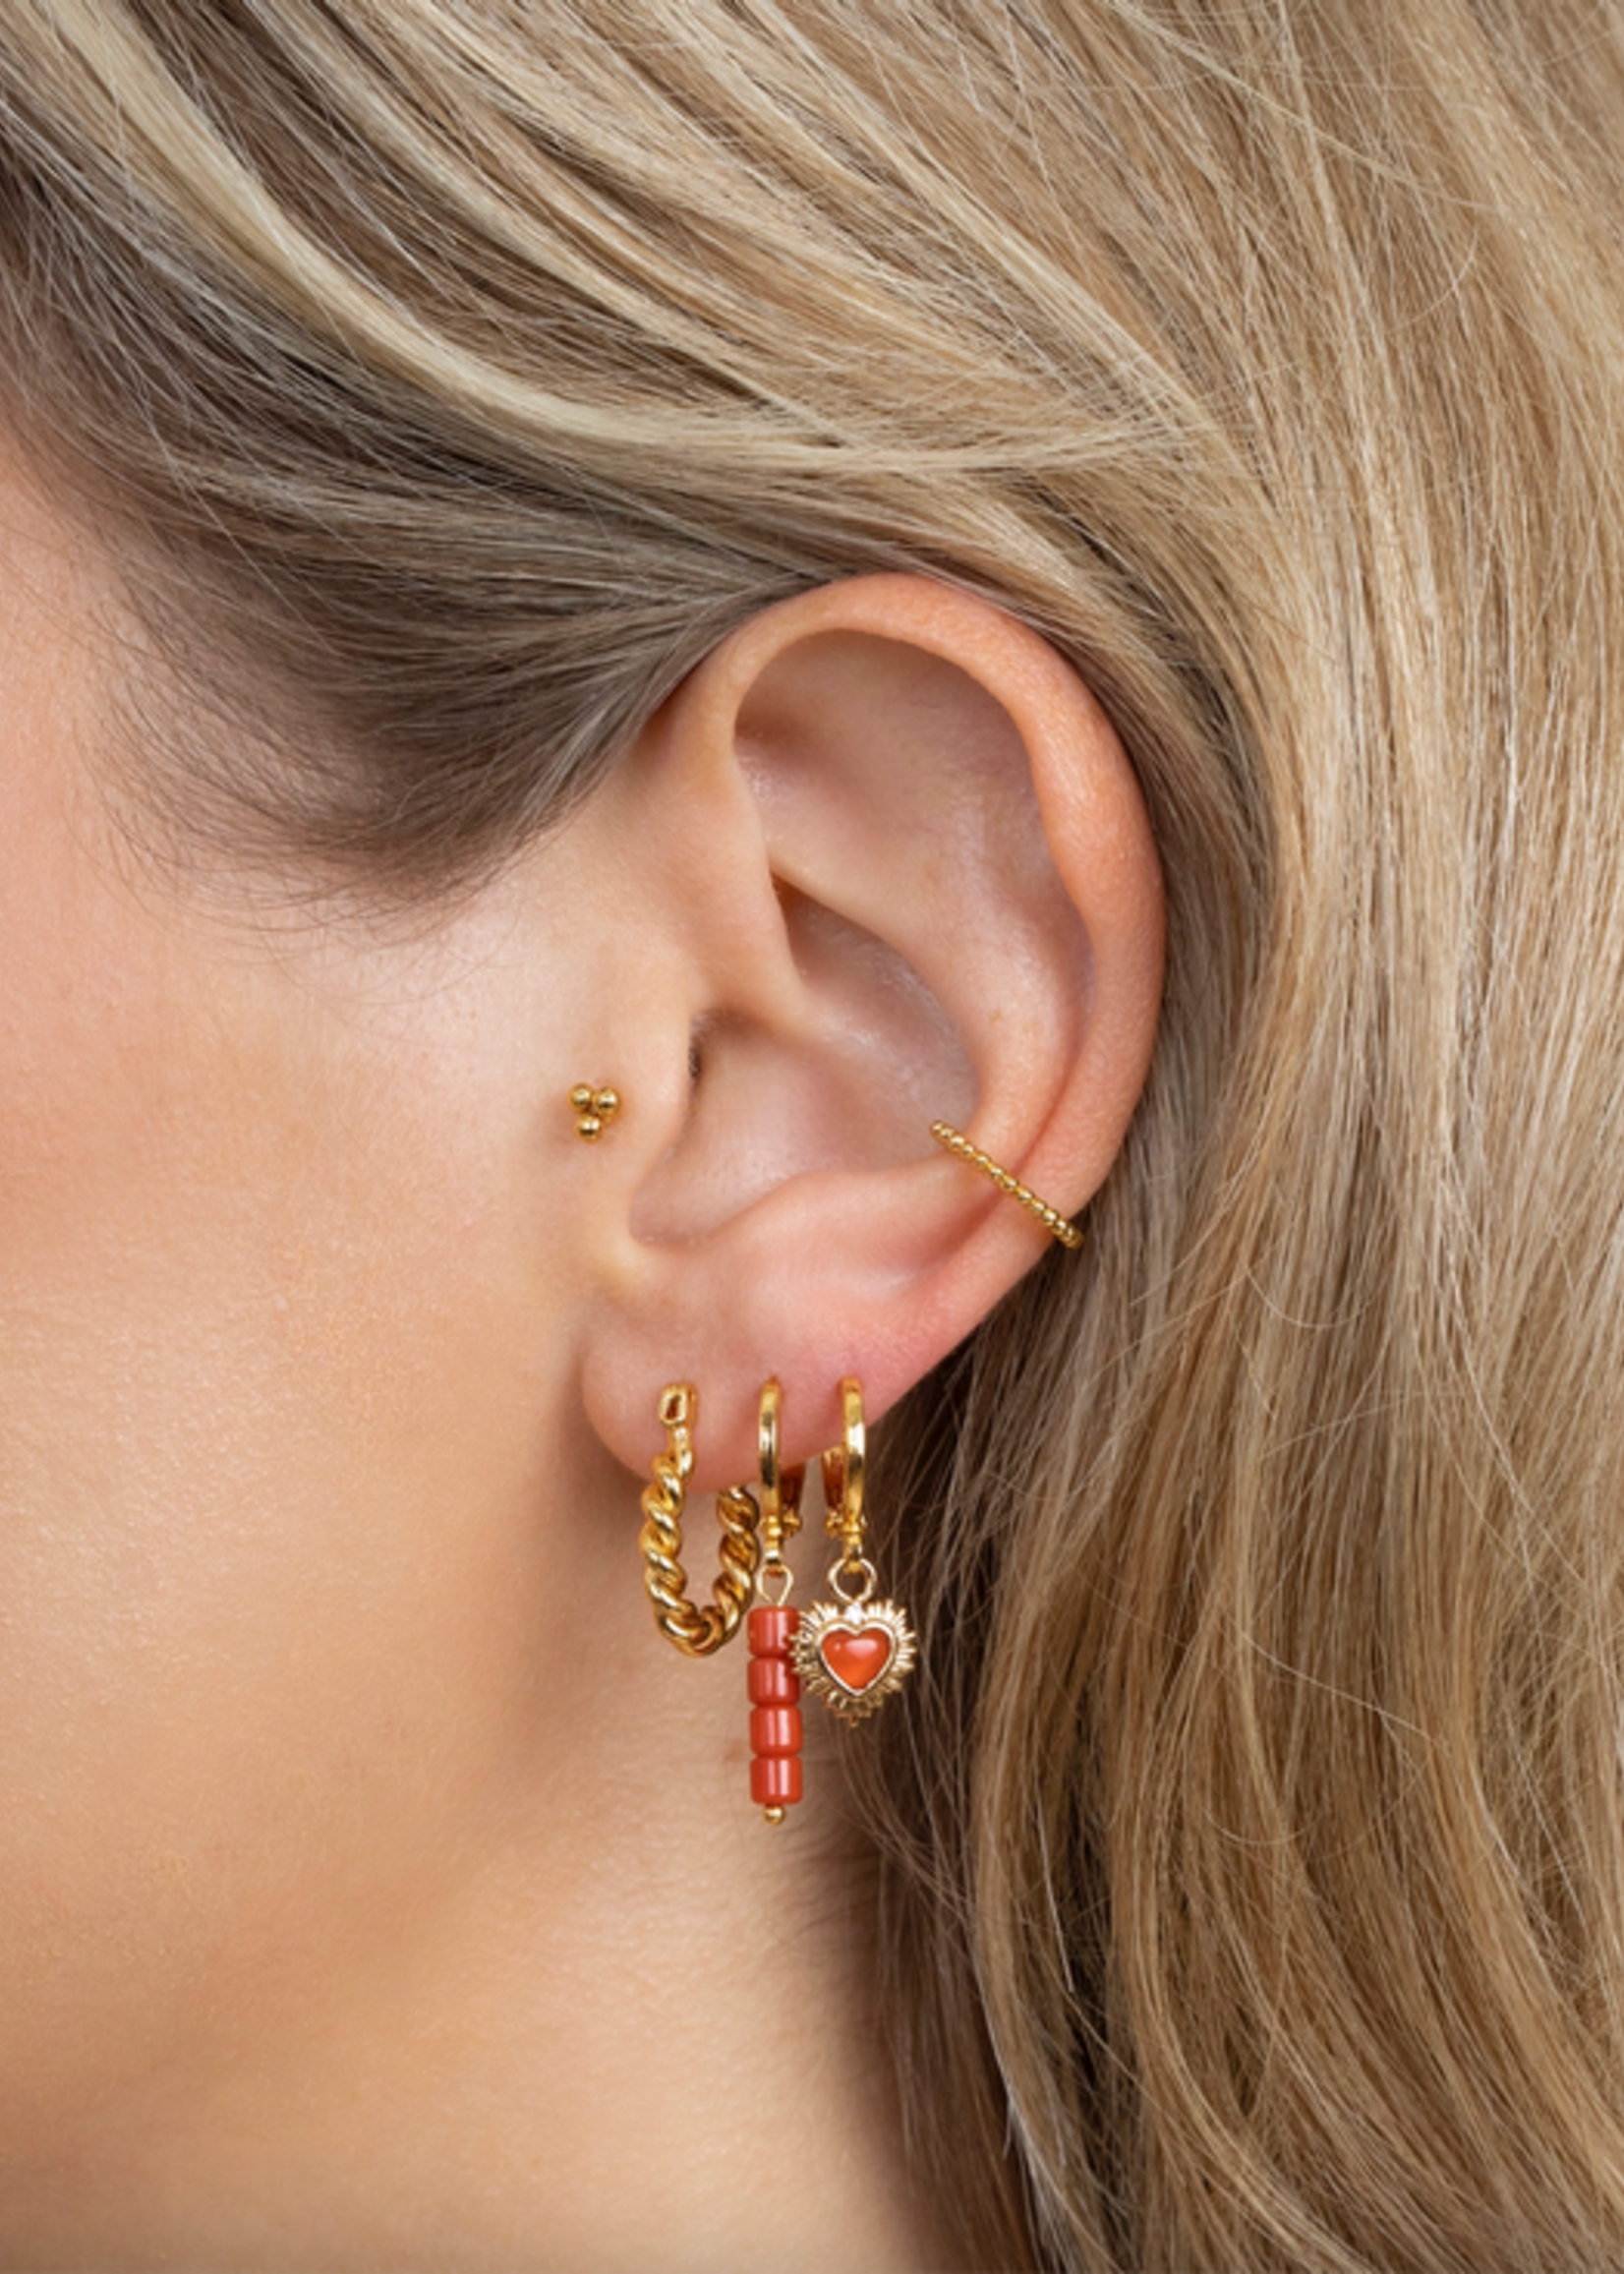 ByNouck Jewelry ByNouck Jewelry - Earring Tiny Bordeaux Heart - Gold